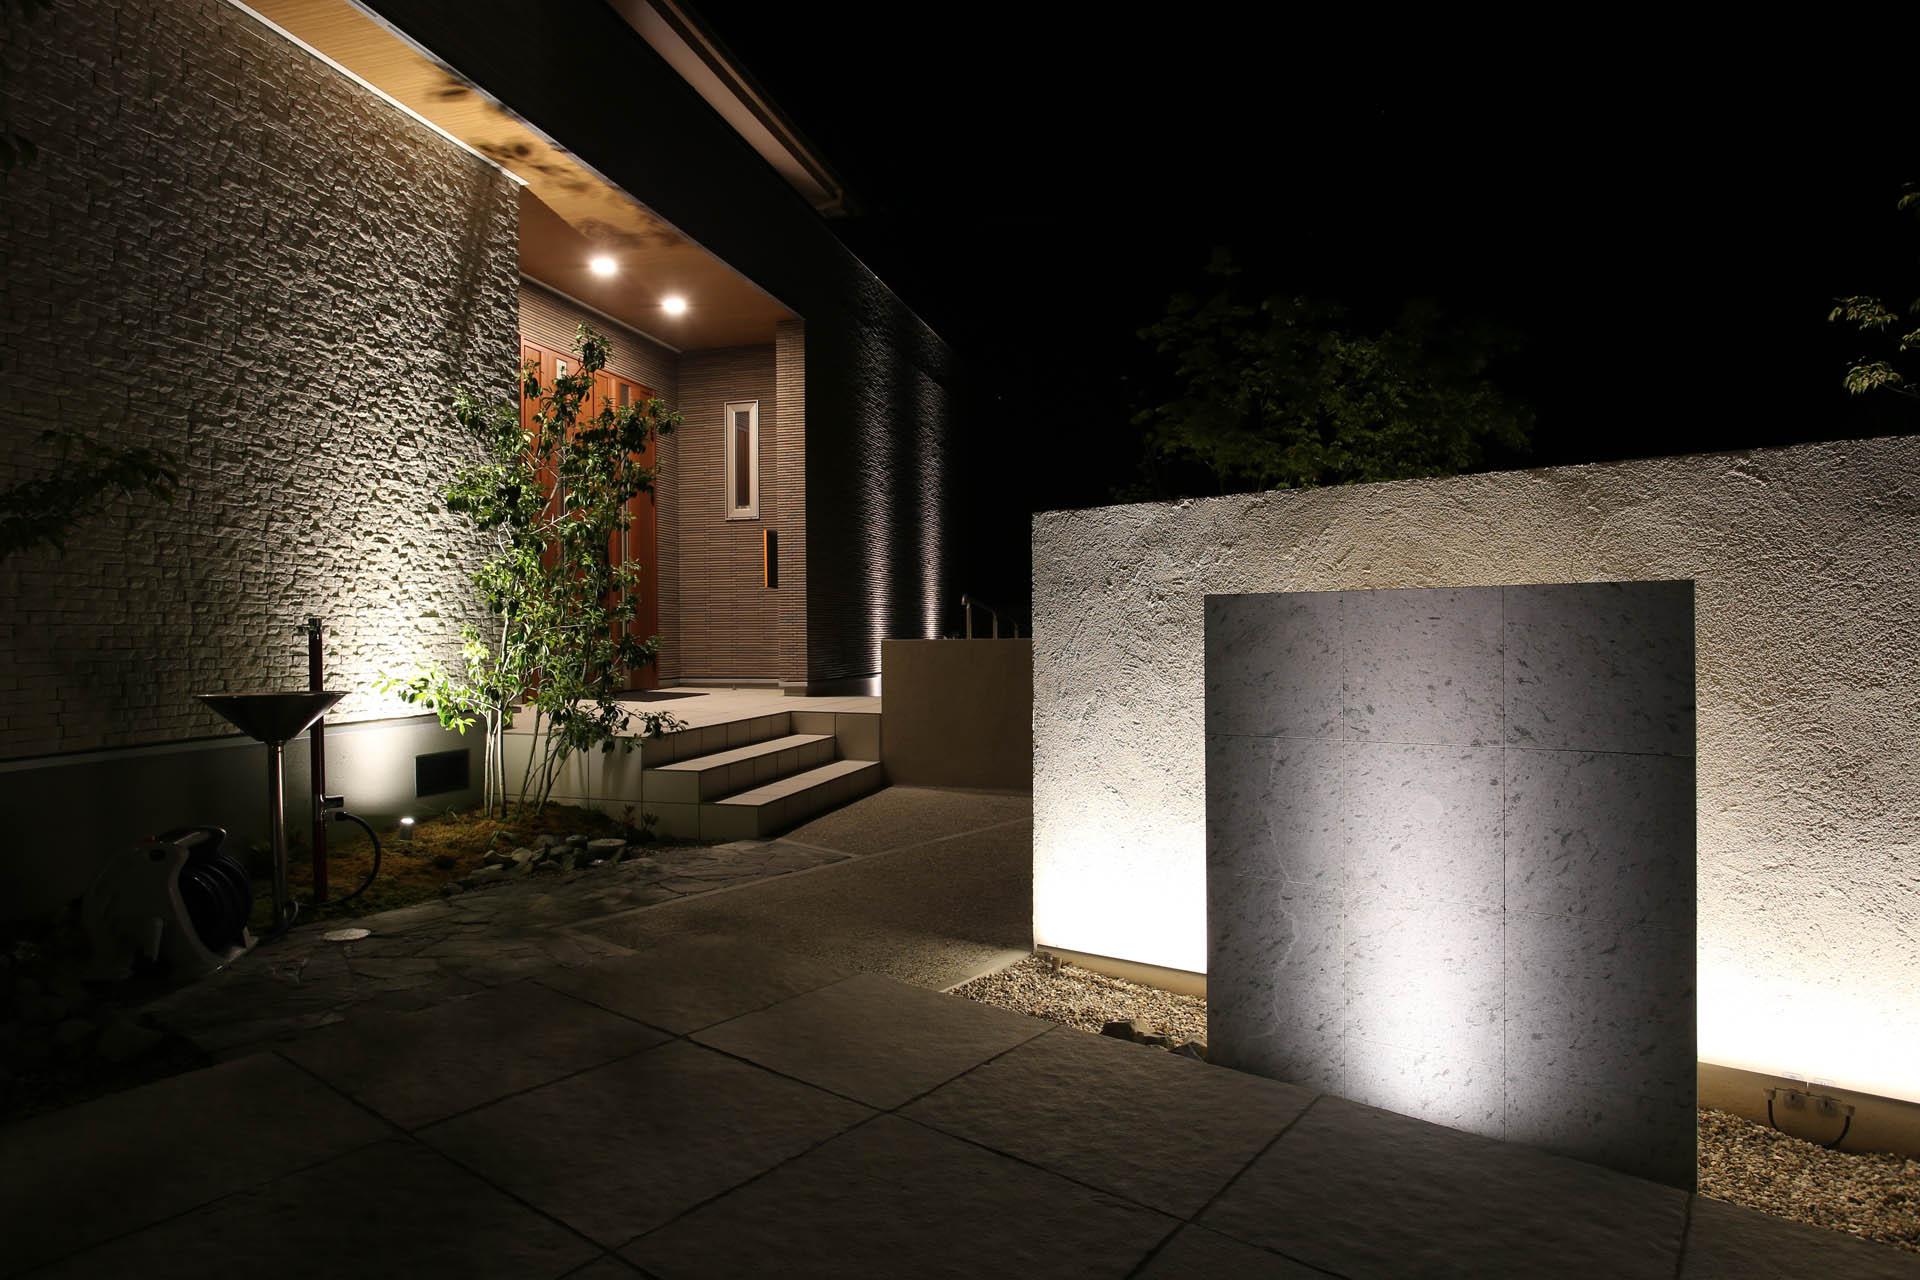 029 002 accessory_light | Takasho Digitec Co., Ltd. | Outdoor Lighting